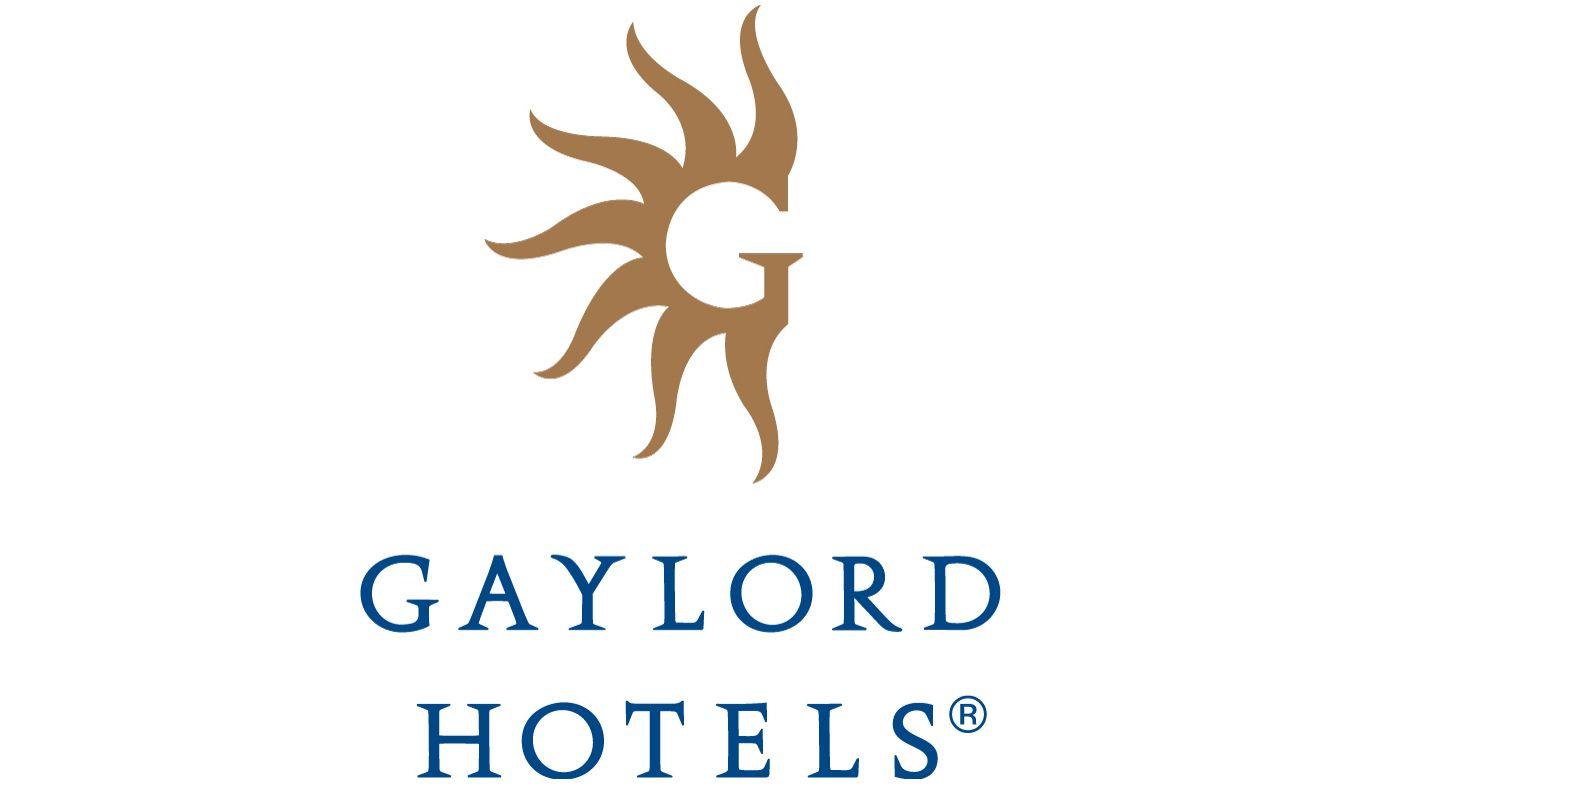 Gaylord Logo - Brand Photos & Logos | Marriott News Center